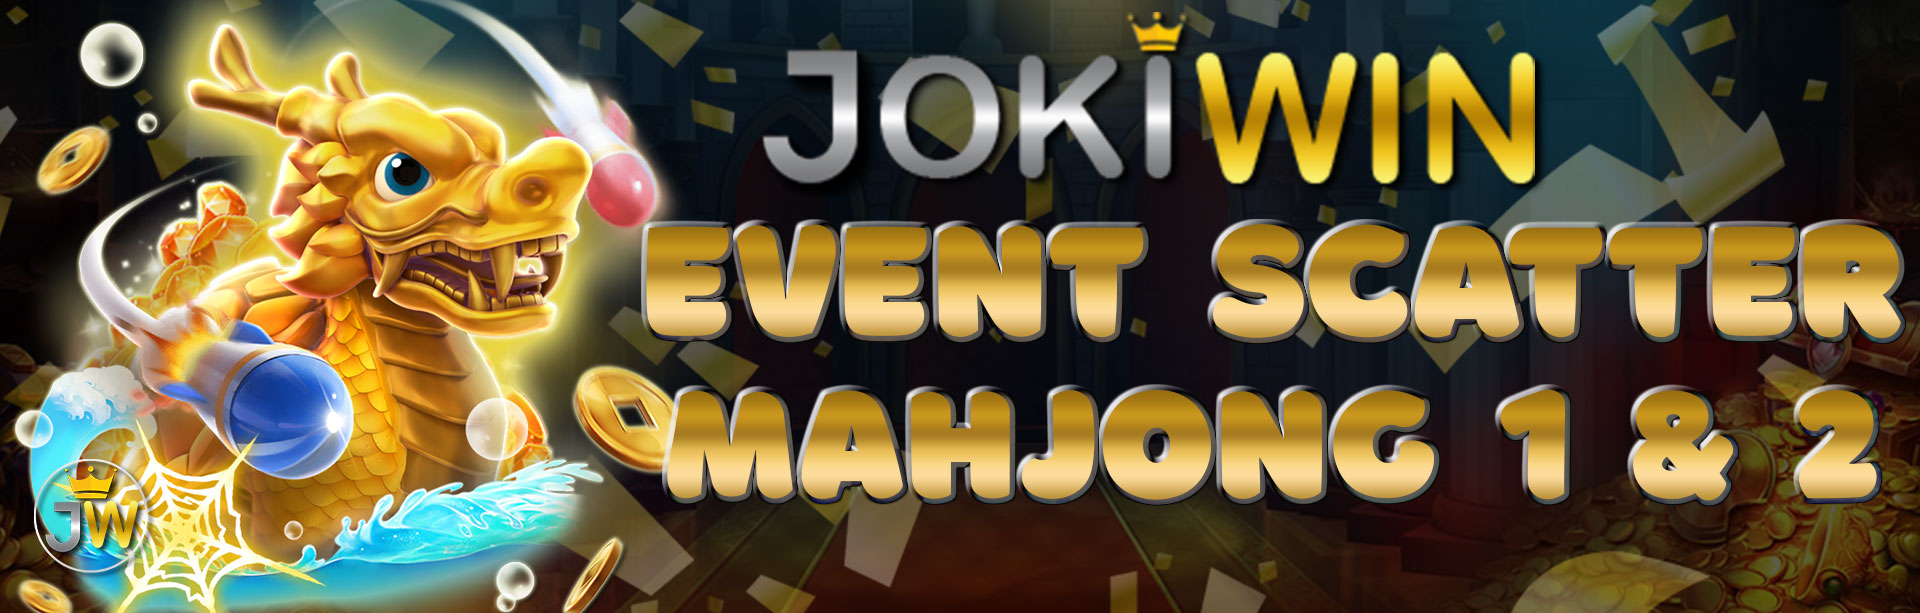 Event Scatter Mahjong Jokiwin